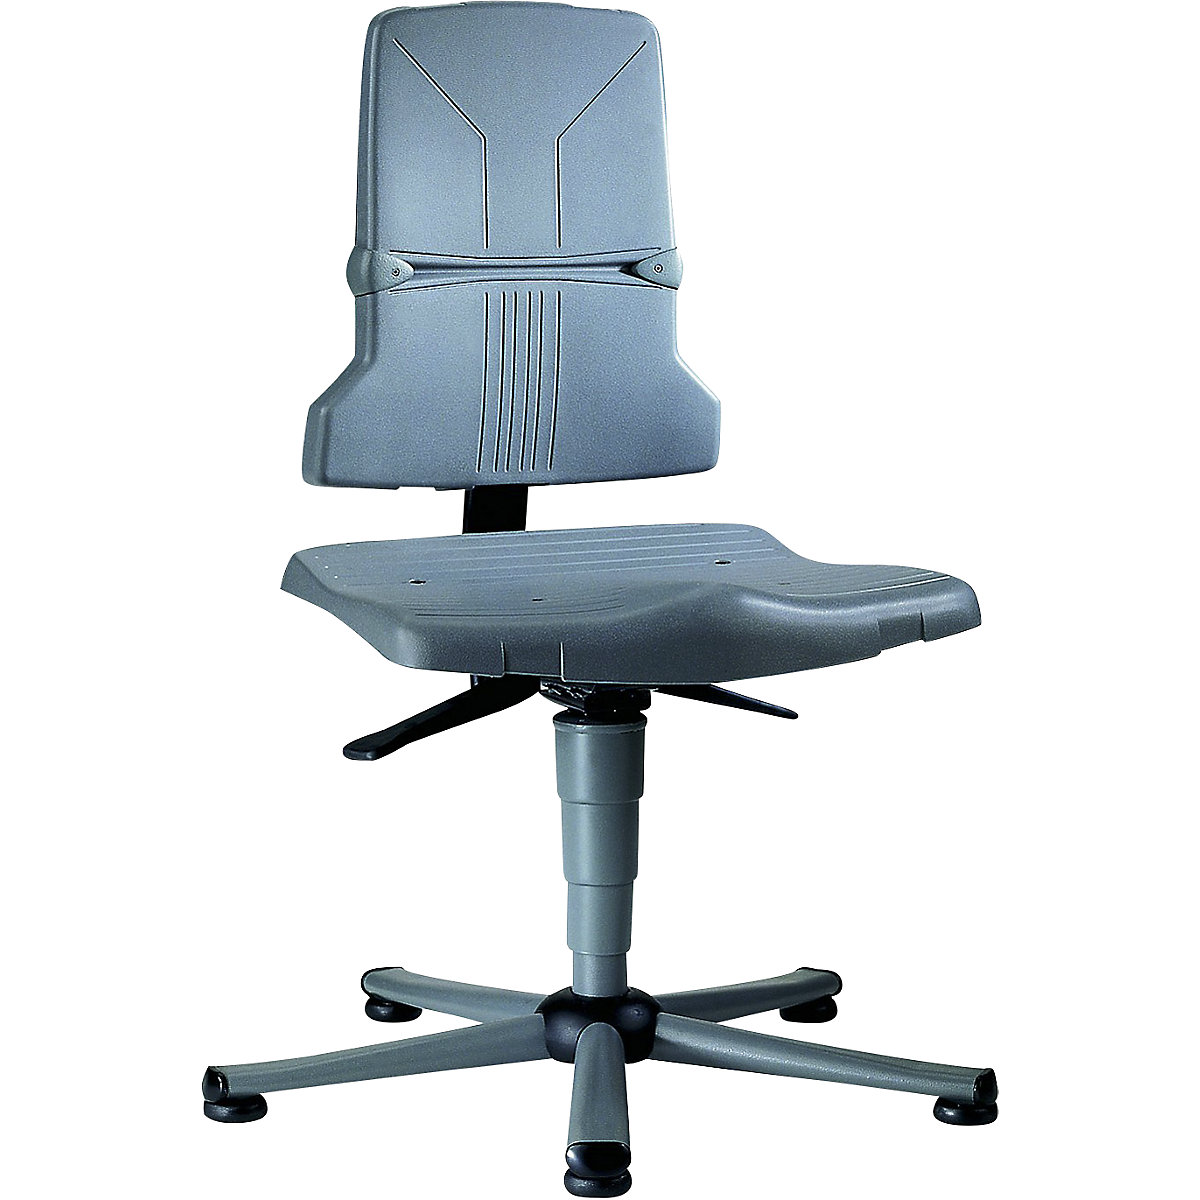 Pracovní otočná židle SINTEC – bimos